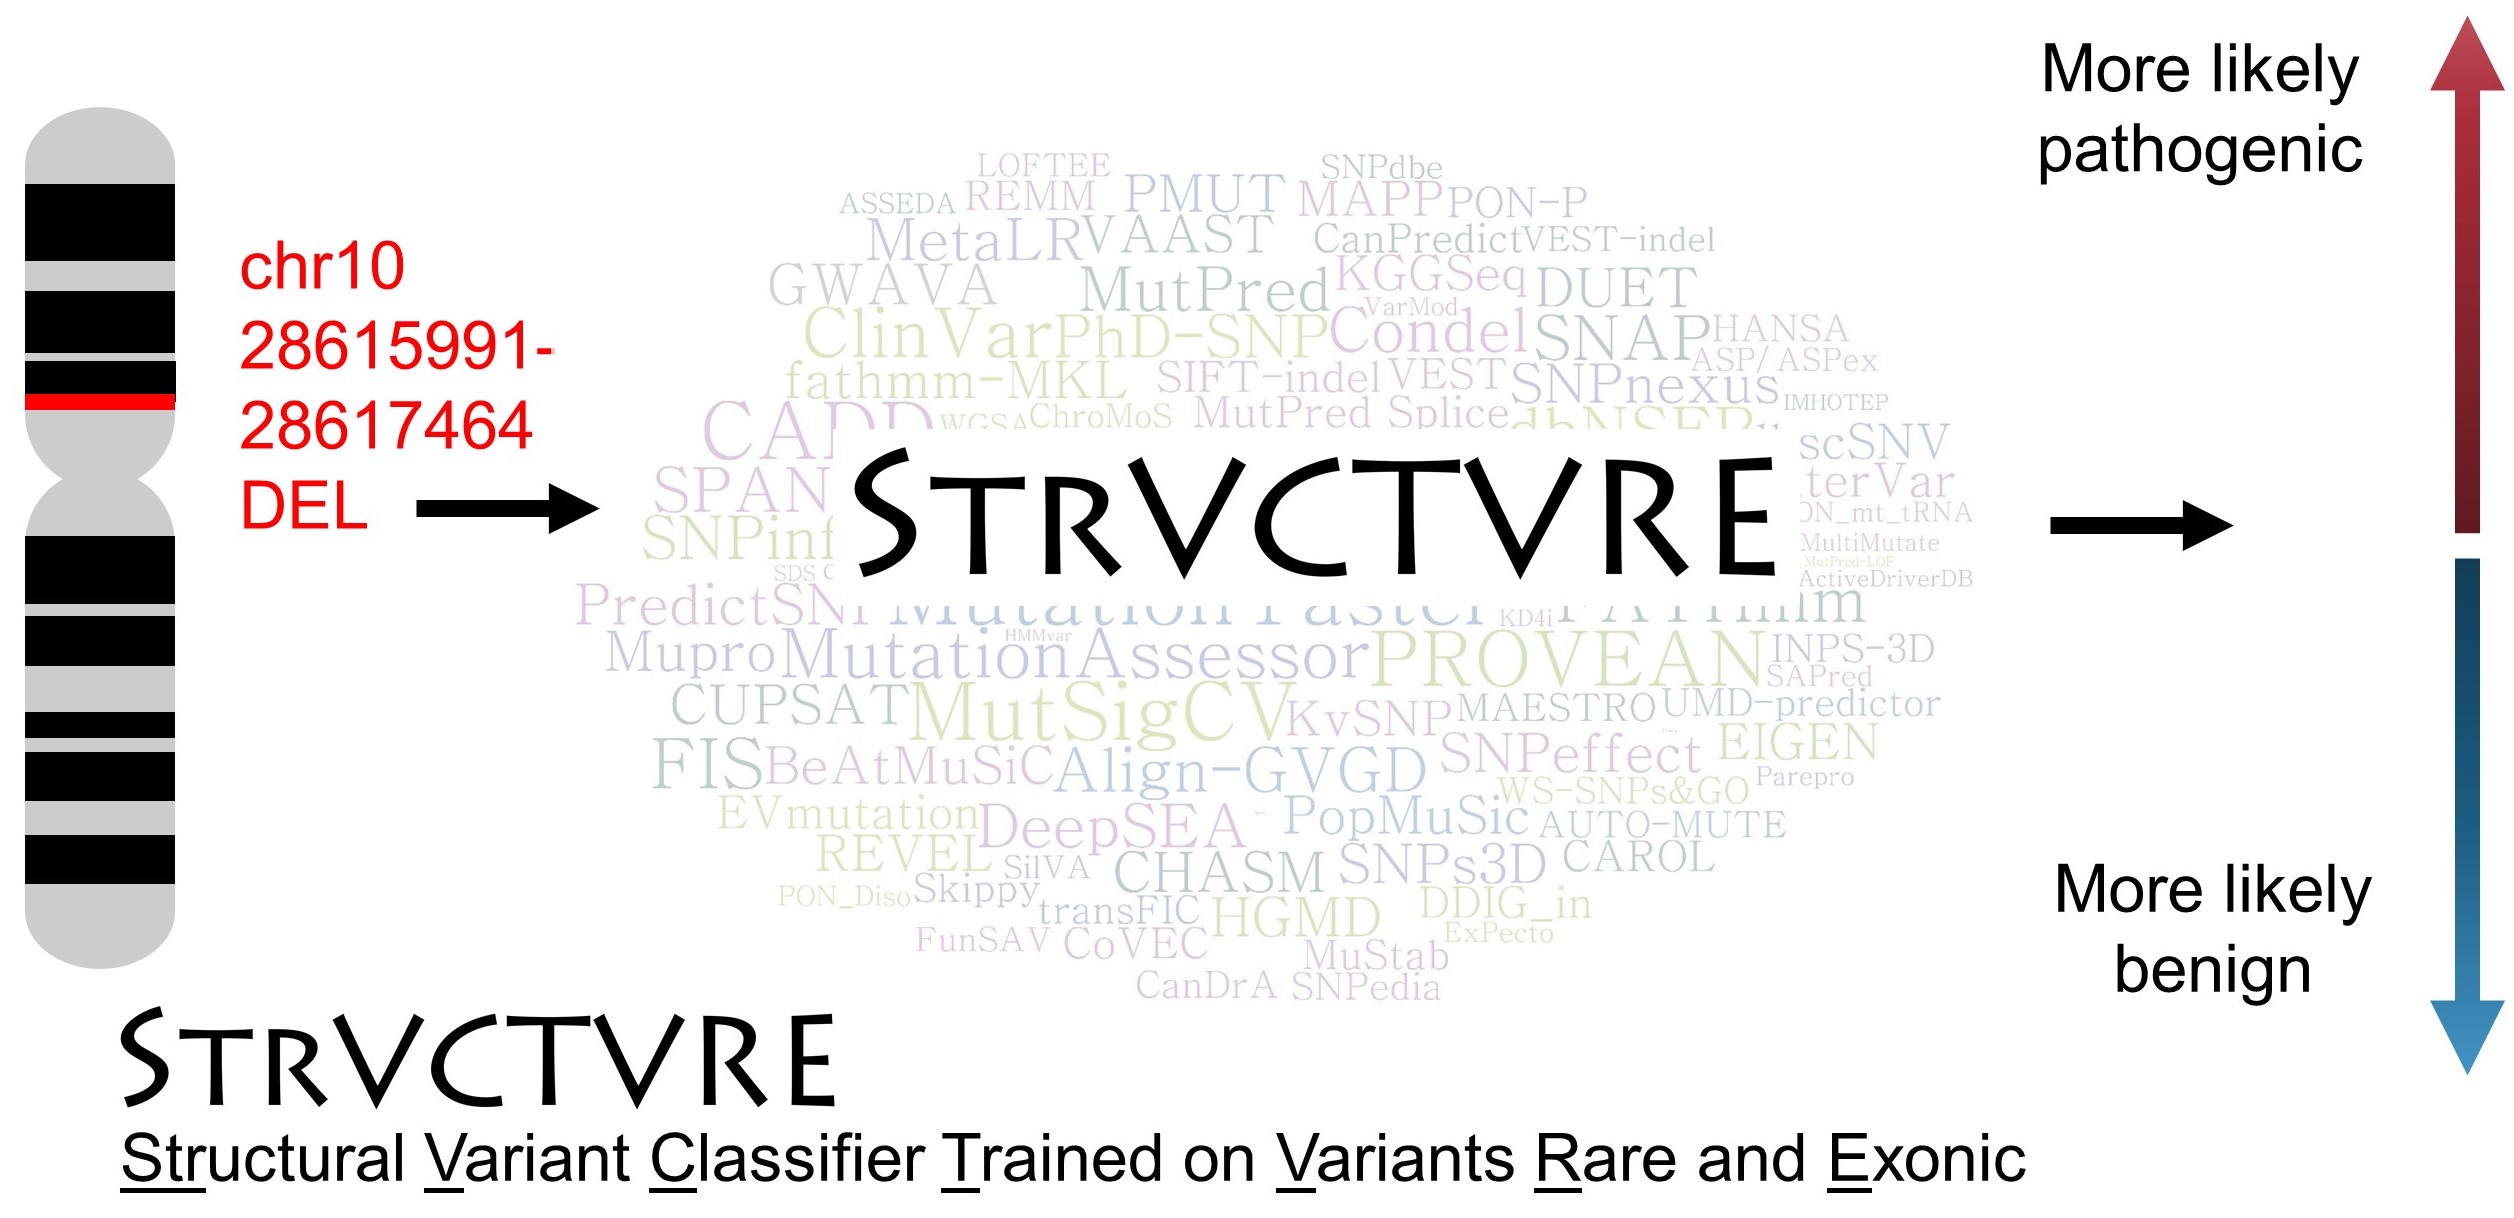 Illustration of StrVCTVRE